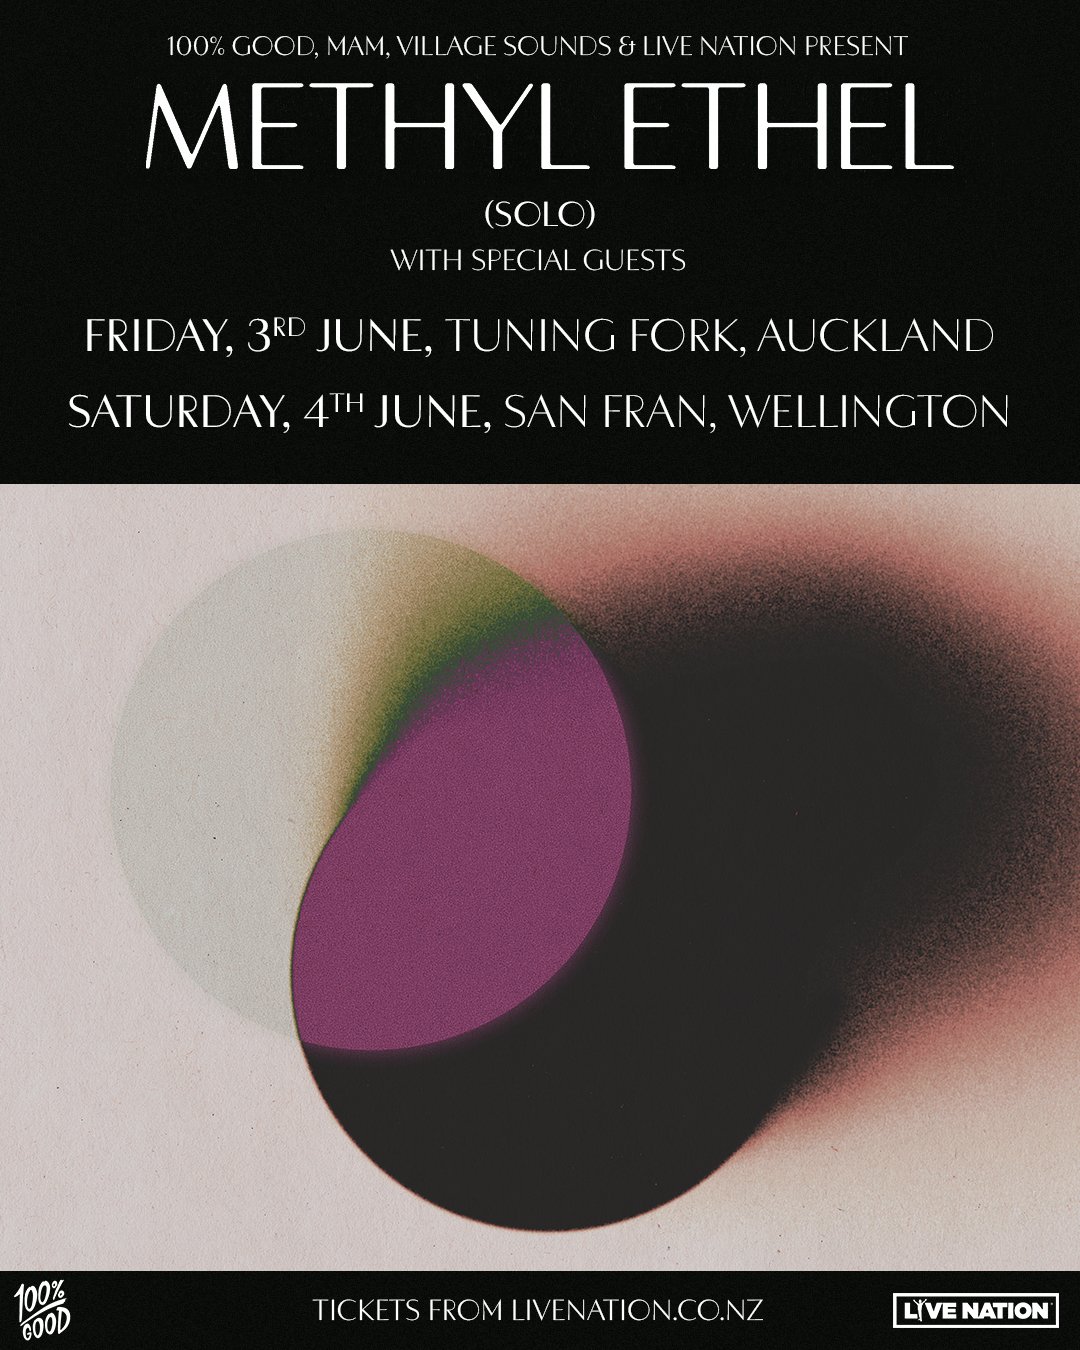 METHYL ETHEL NZ INSTA- 1080x1350 B.jpg